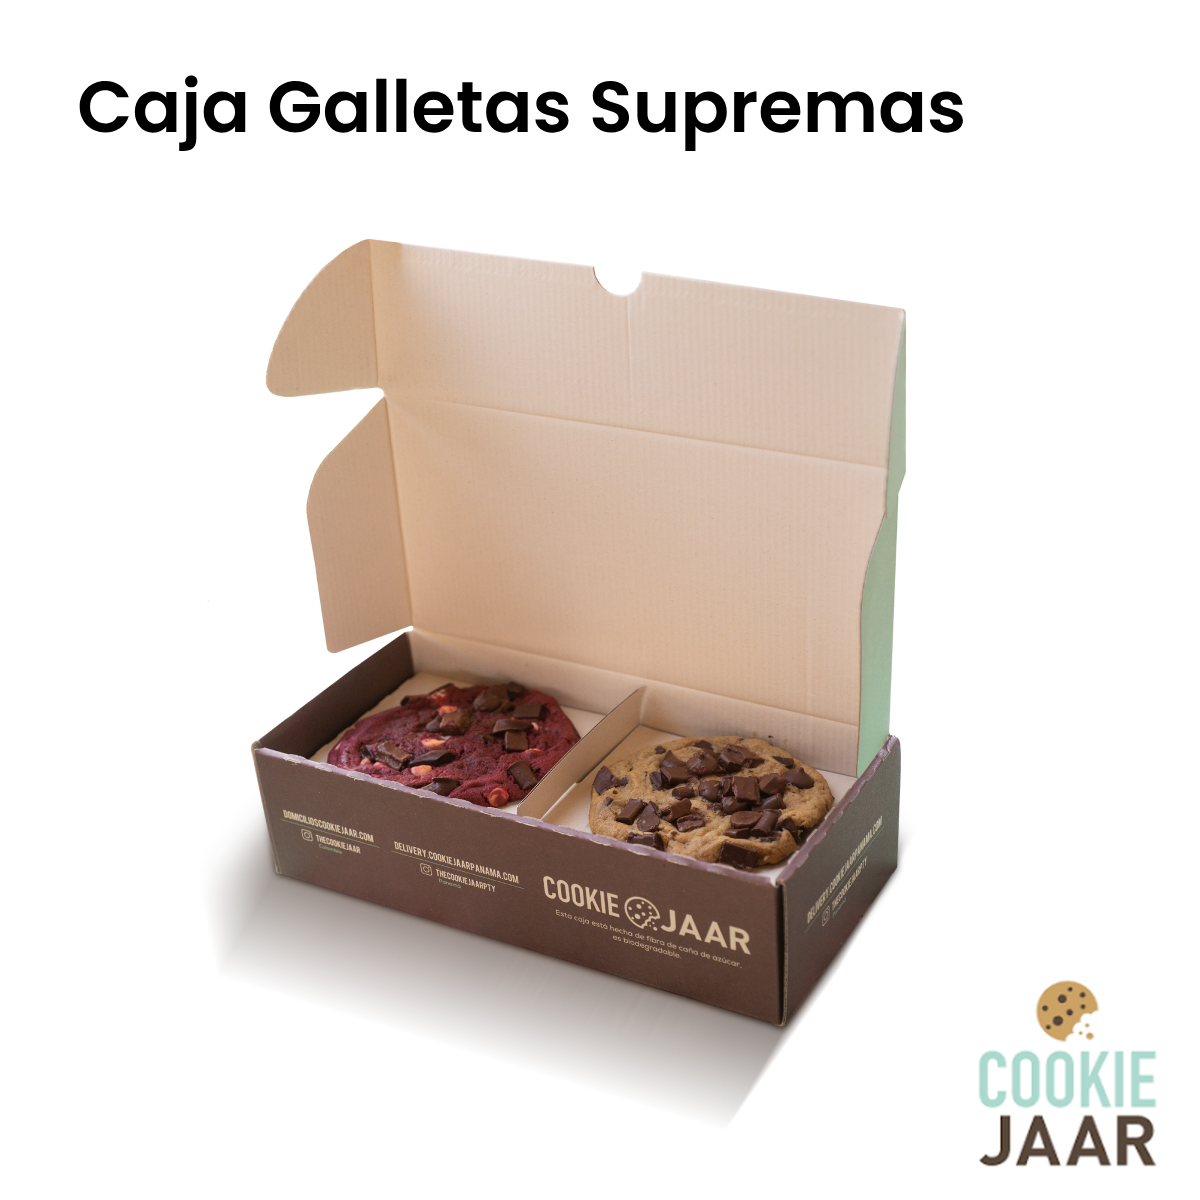 Caja Suprema 2 Galletas - Cookie Jaar